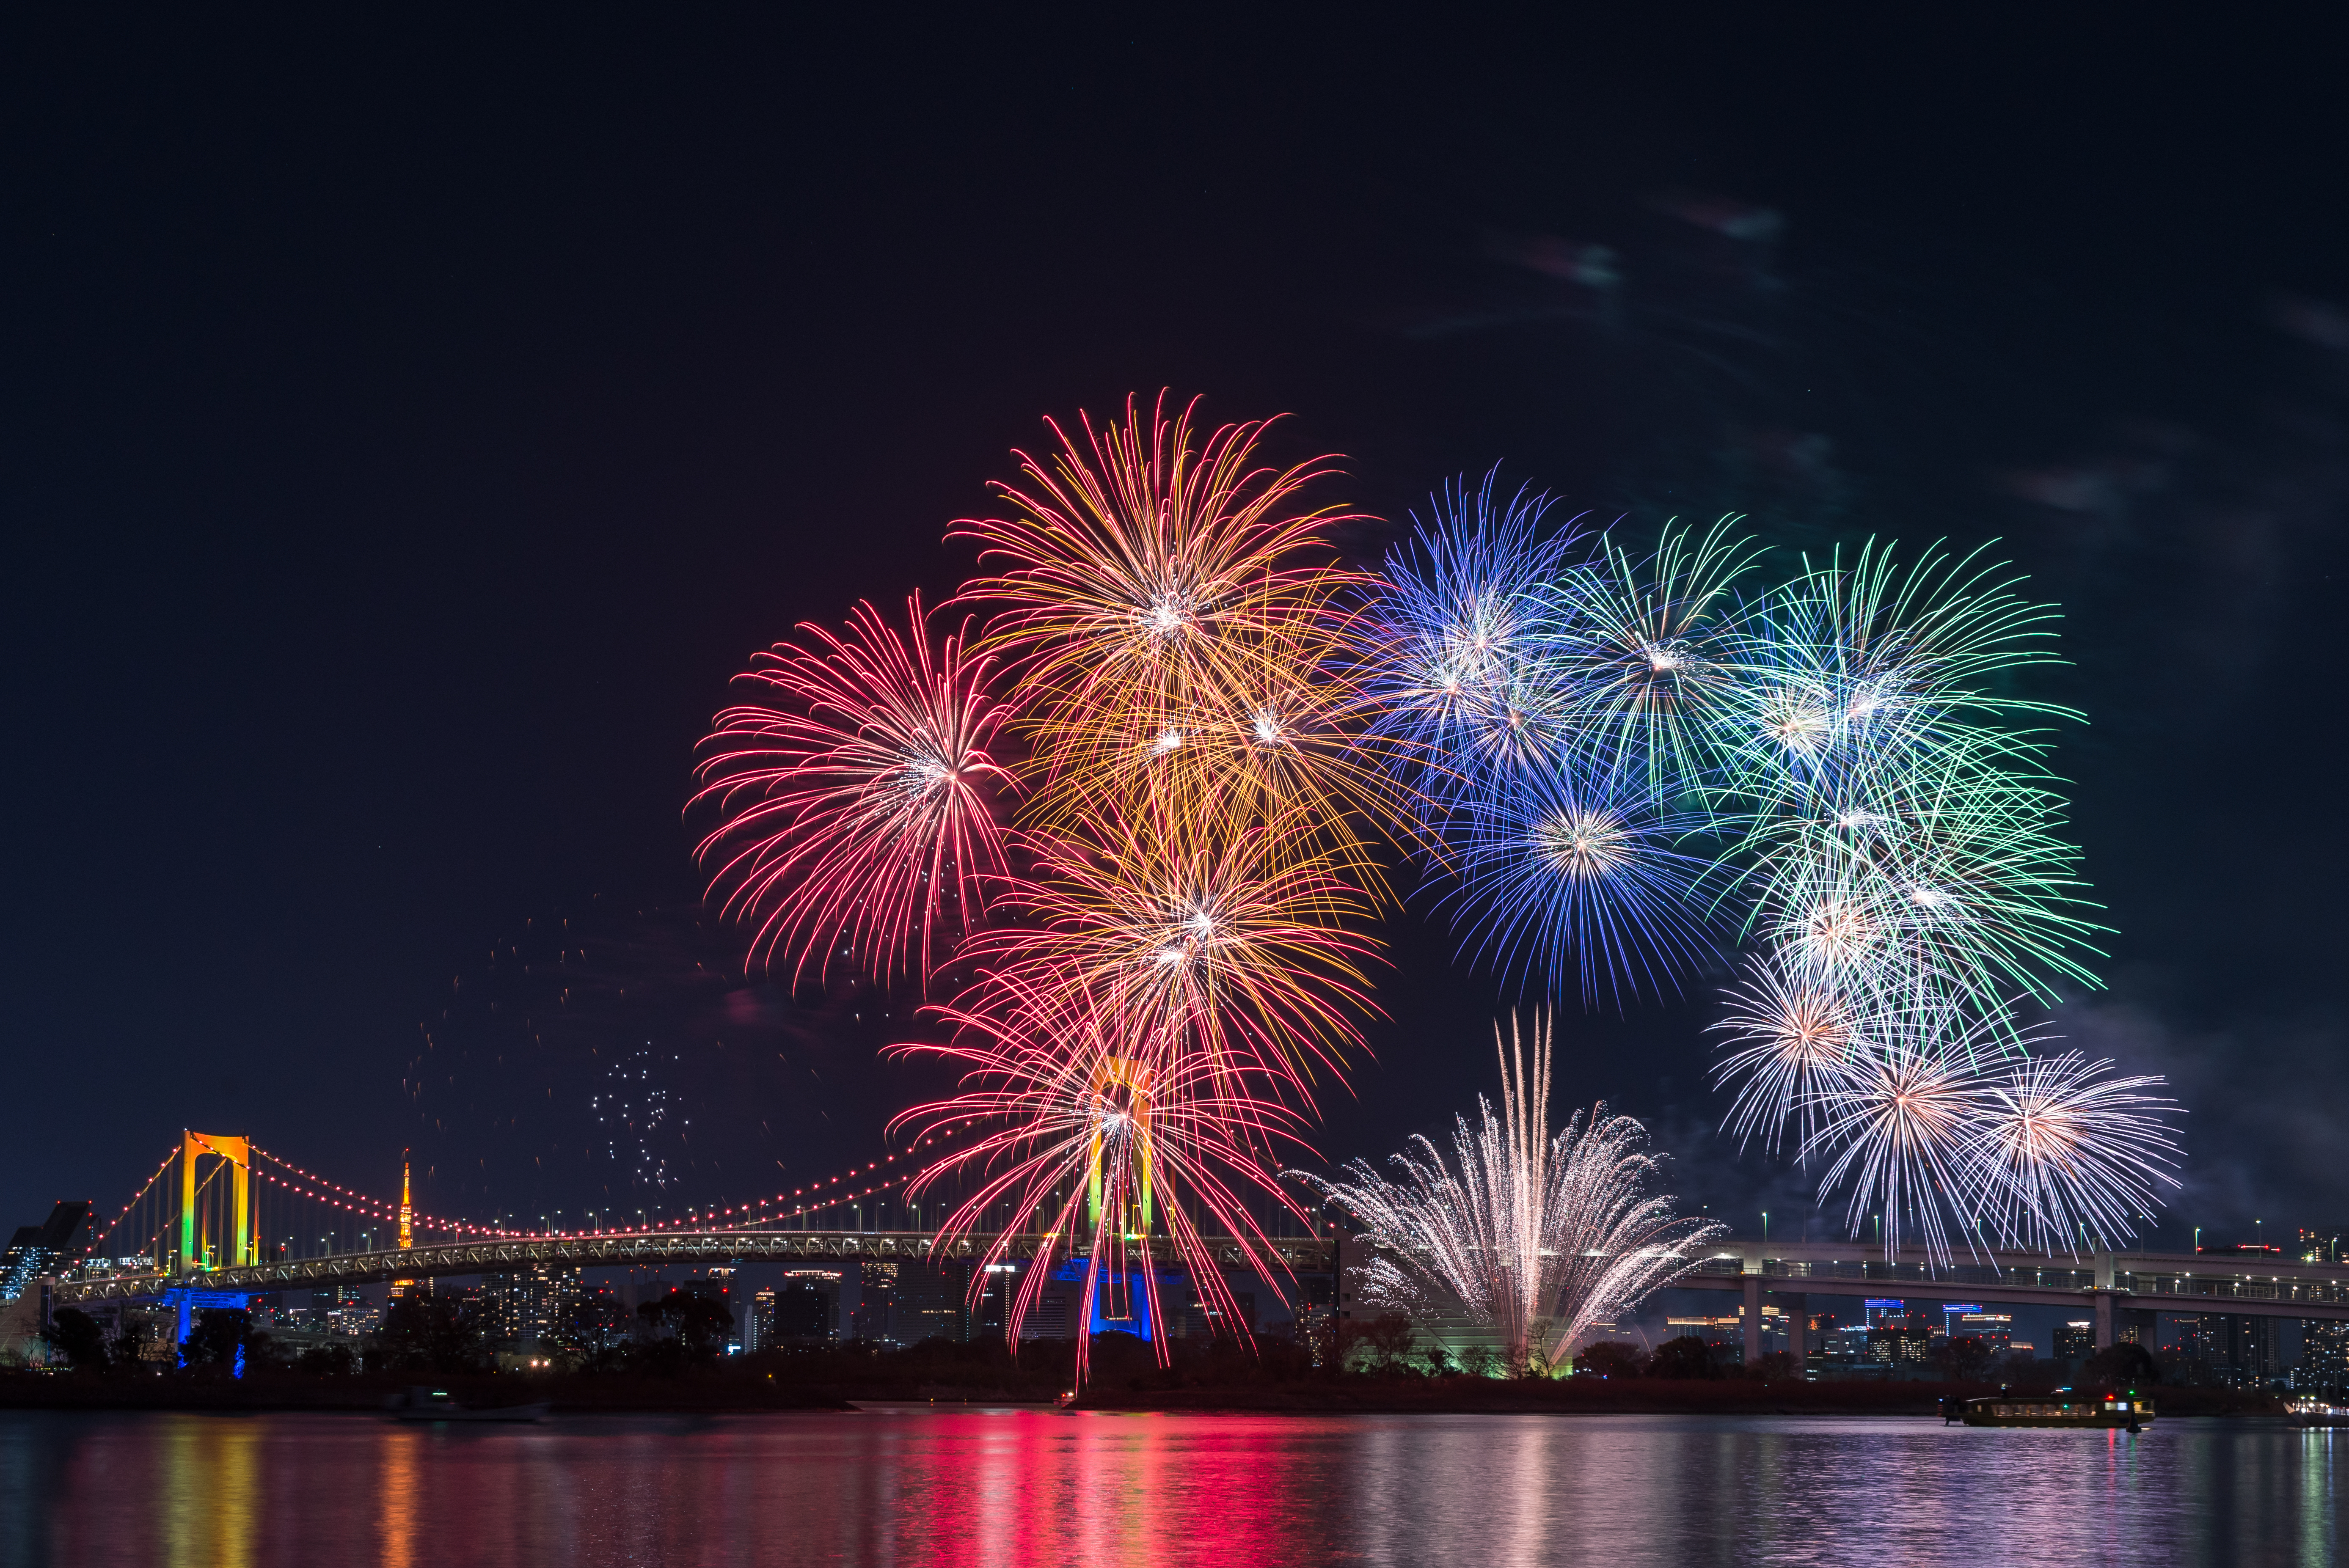 A fireworks display over Tokyo Bay